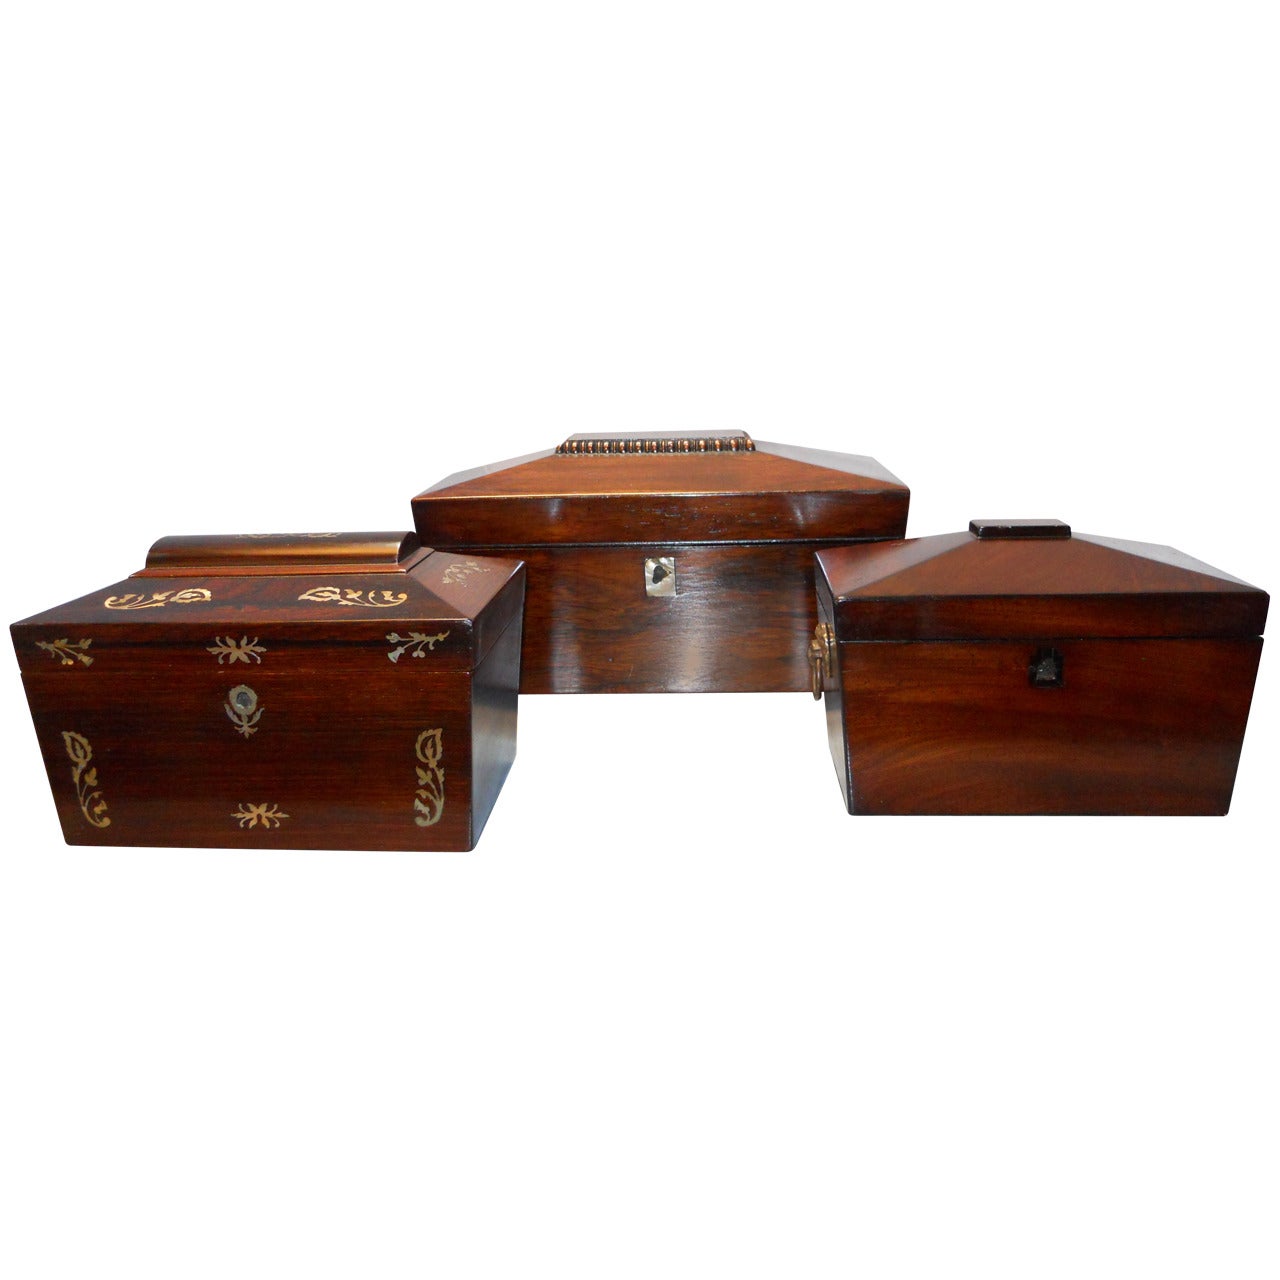 Set of Three 19th Century English Boxes or Tea Caddys